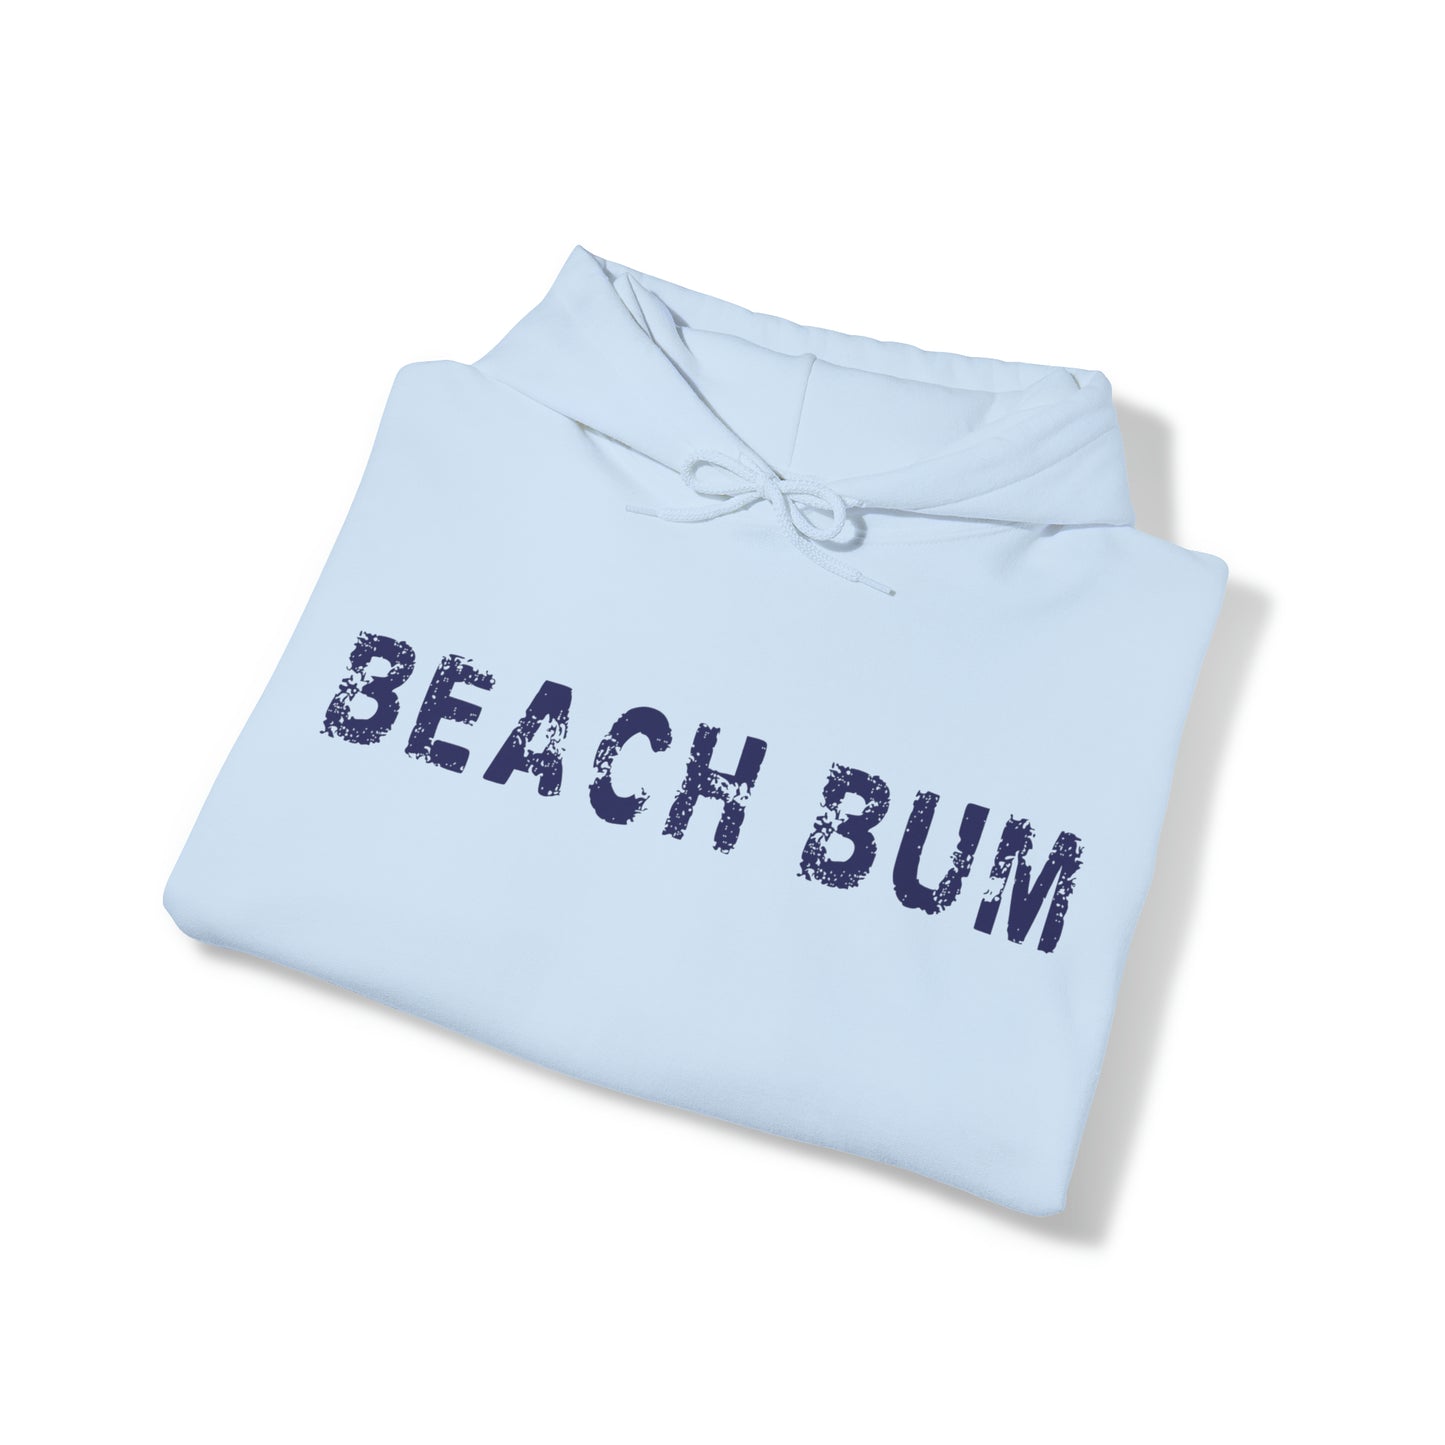 Beach Hoodie Beach Bum Sweatshirt For Women Gift For Men